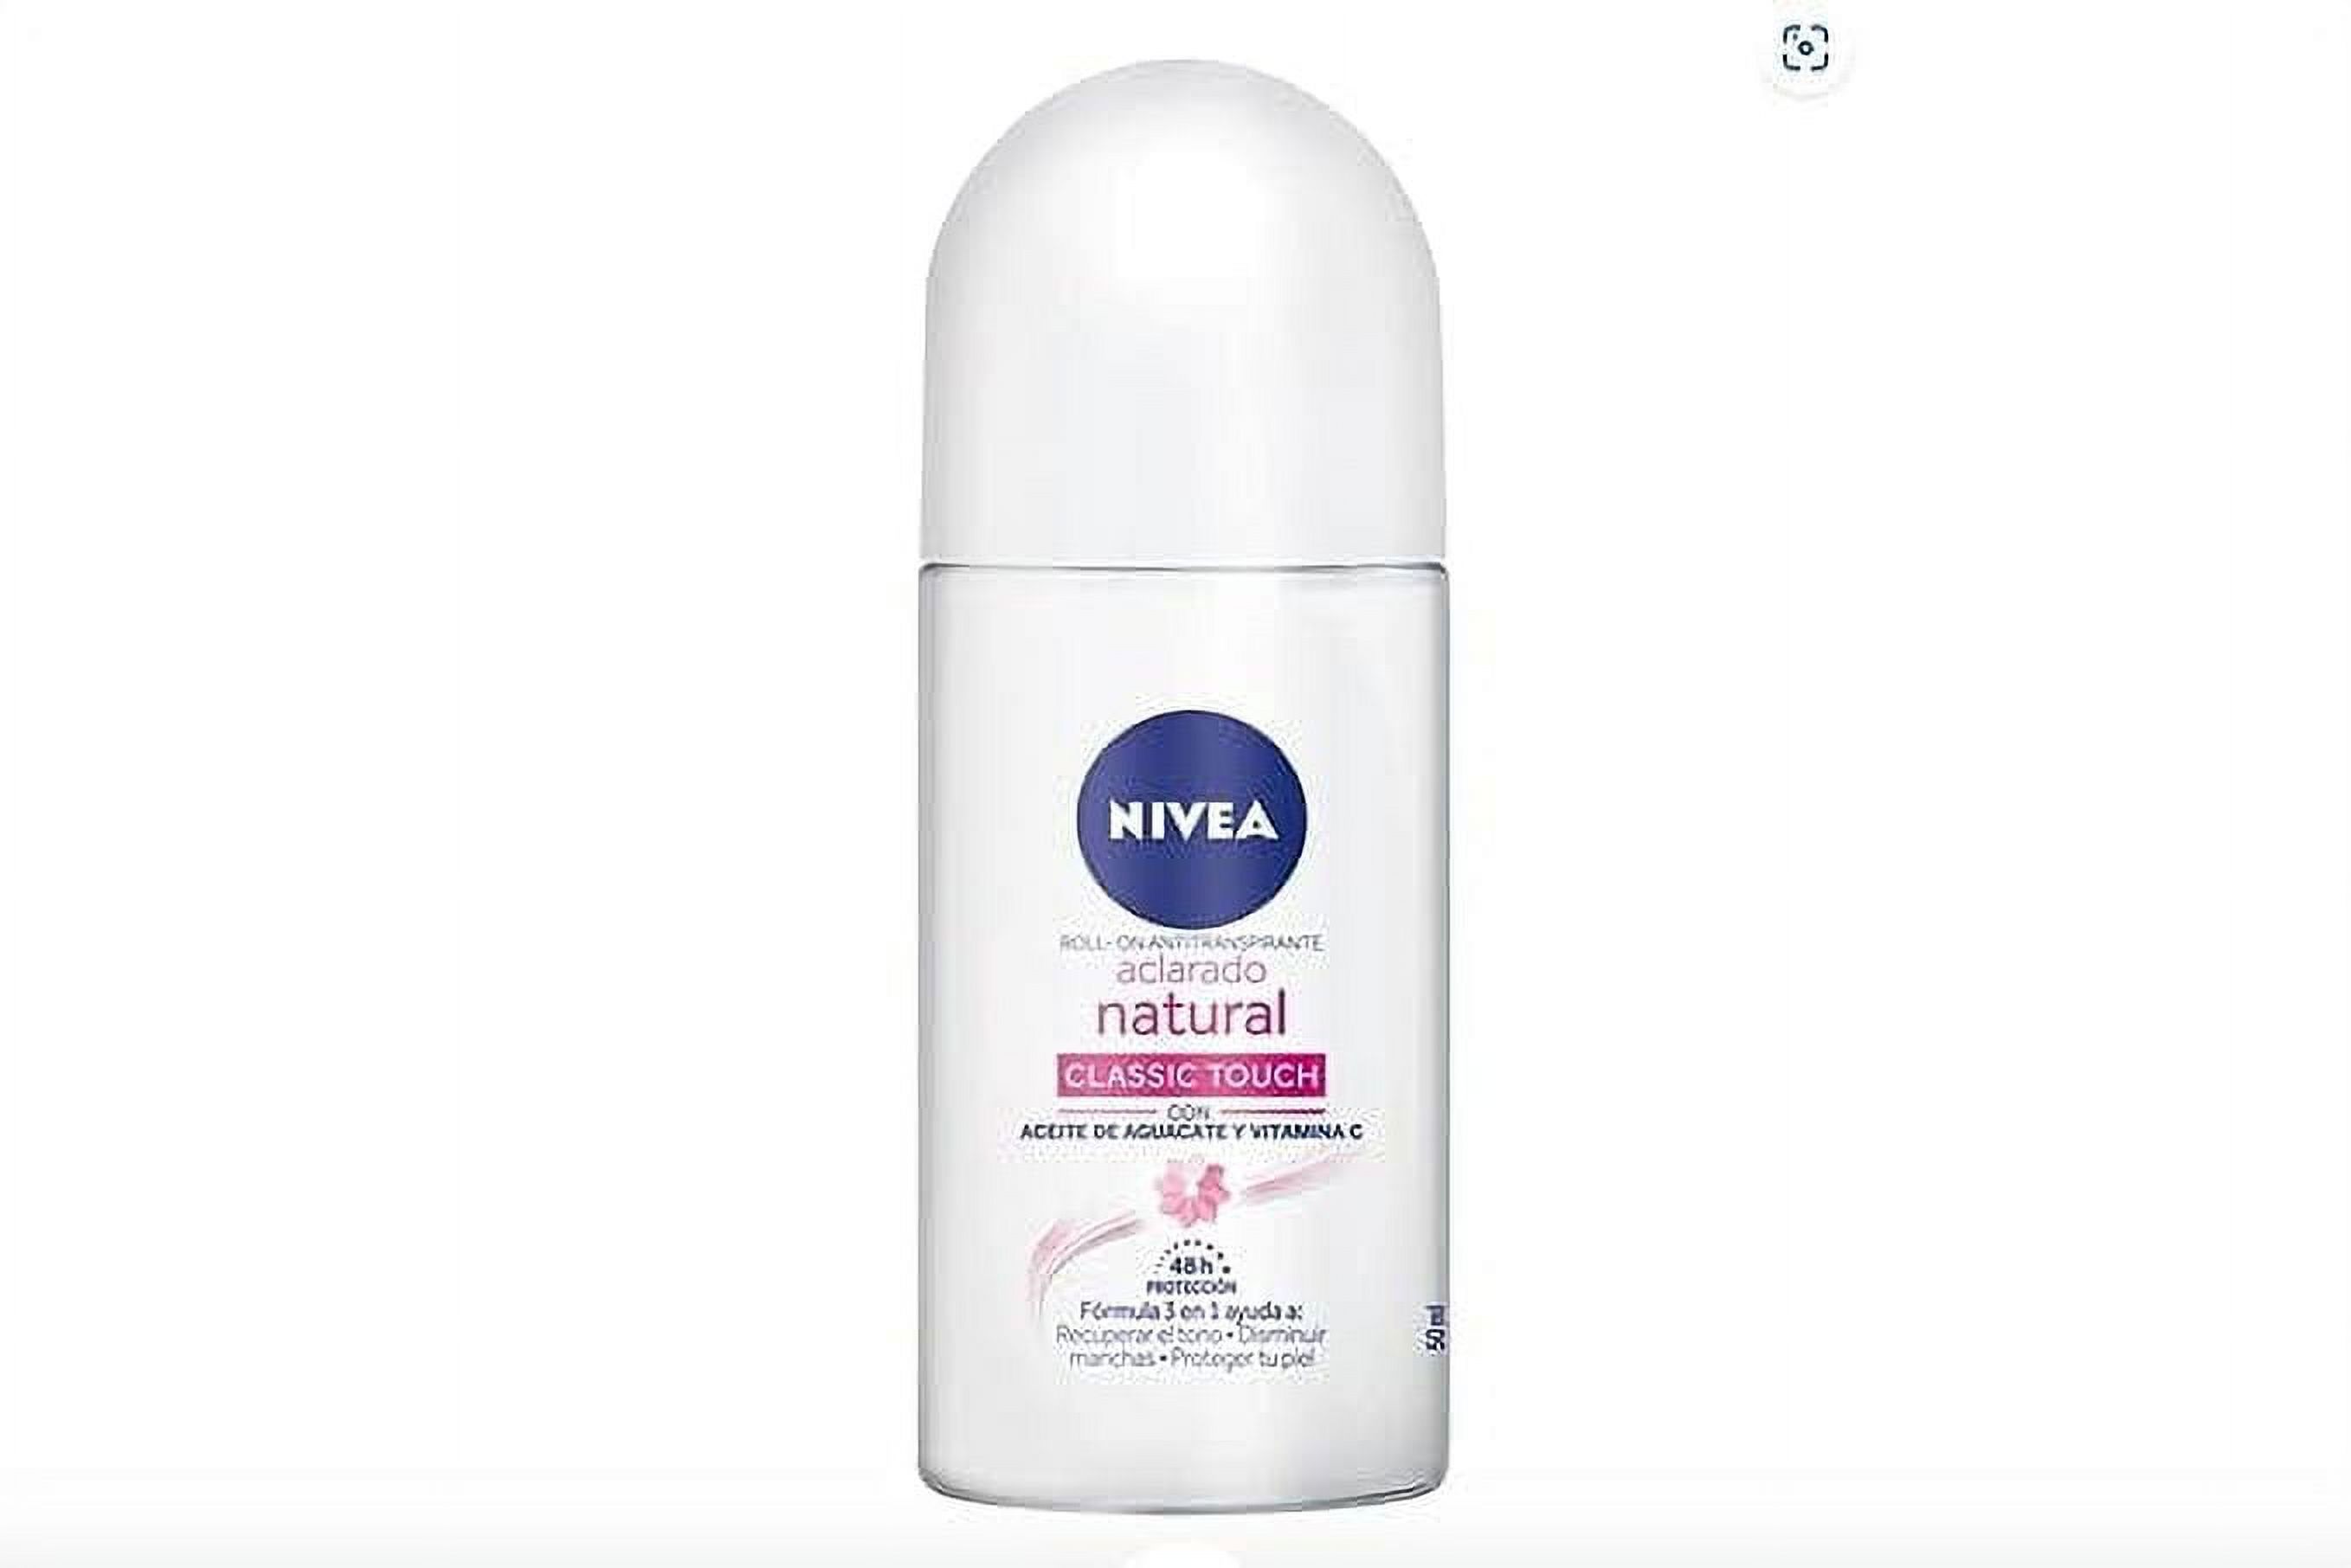 Nivea 4005808837472 50 ml Aclarado Natural Roll On Deodorant for Women - image 5 of 5